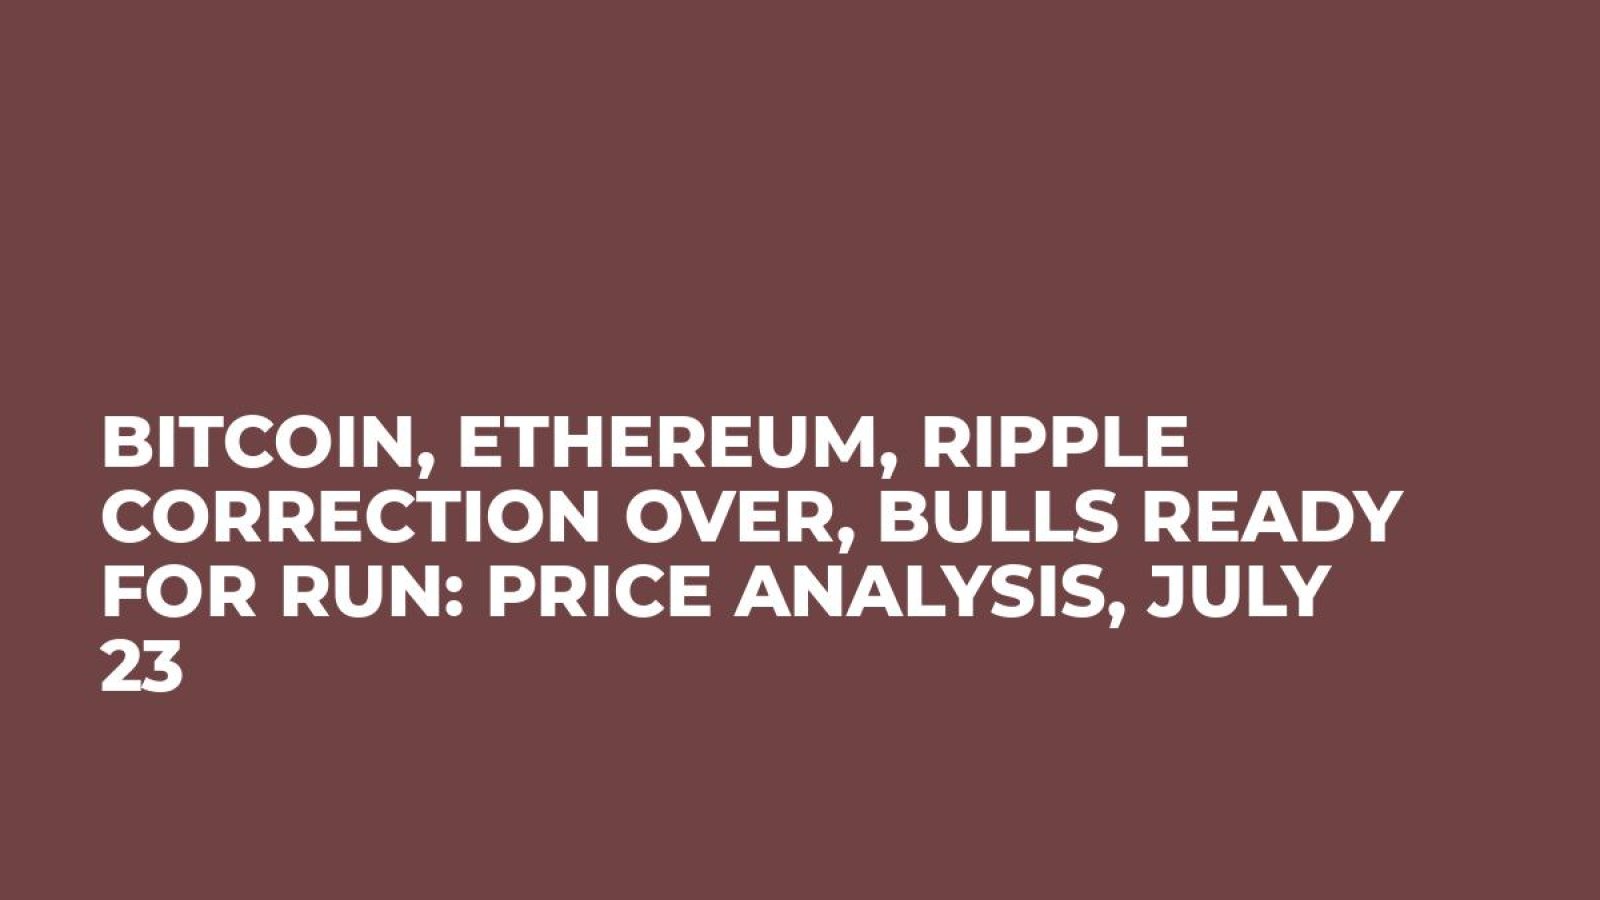 Bitcoin, Ethereum, Ripple Correction Over, Bulls Ready for Run: Price Analysis, July 23